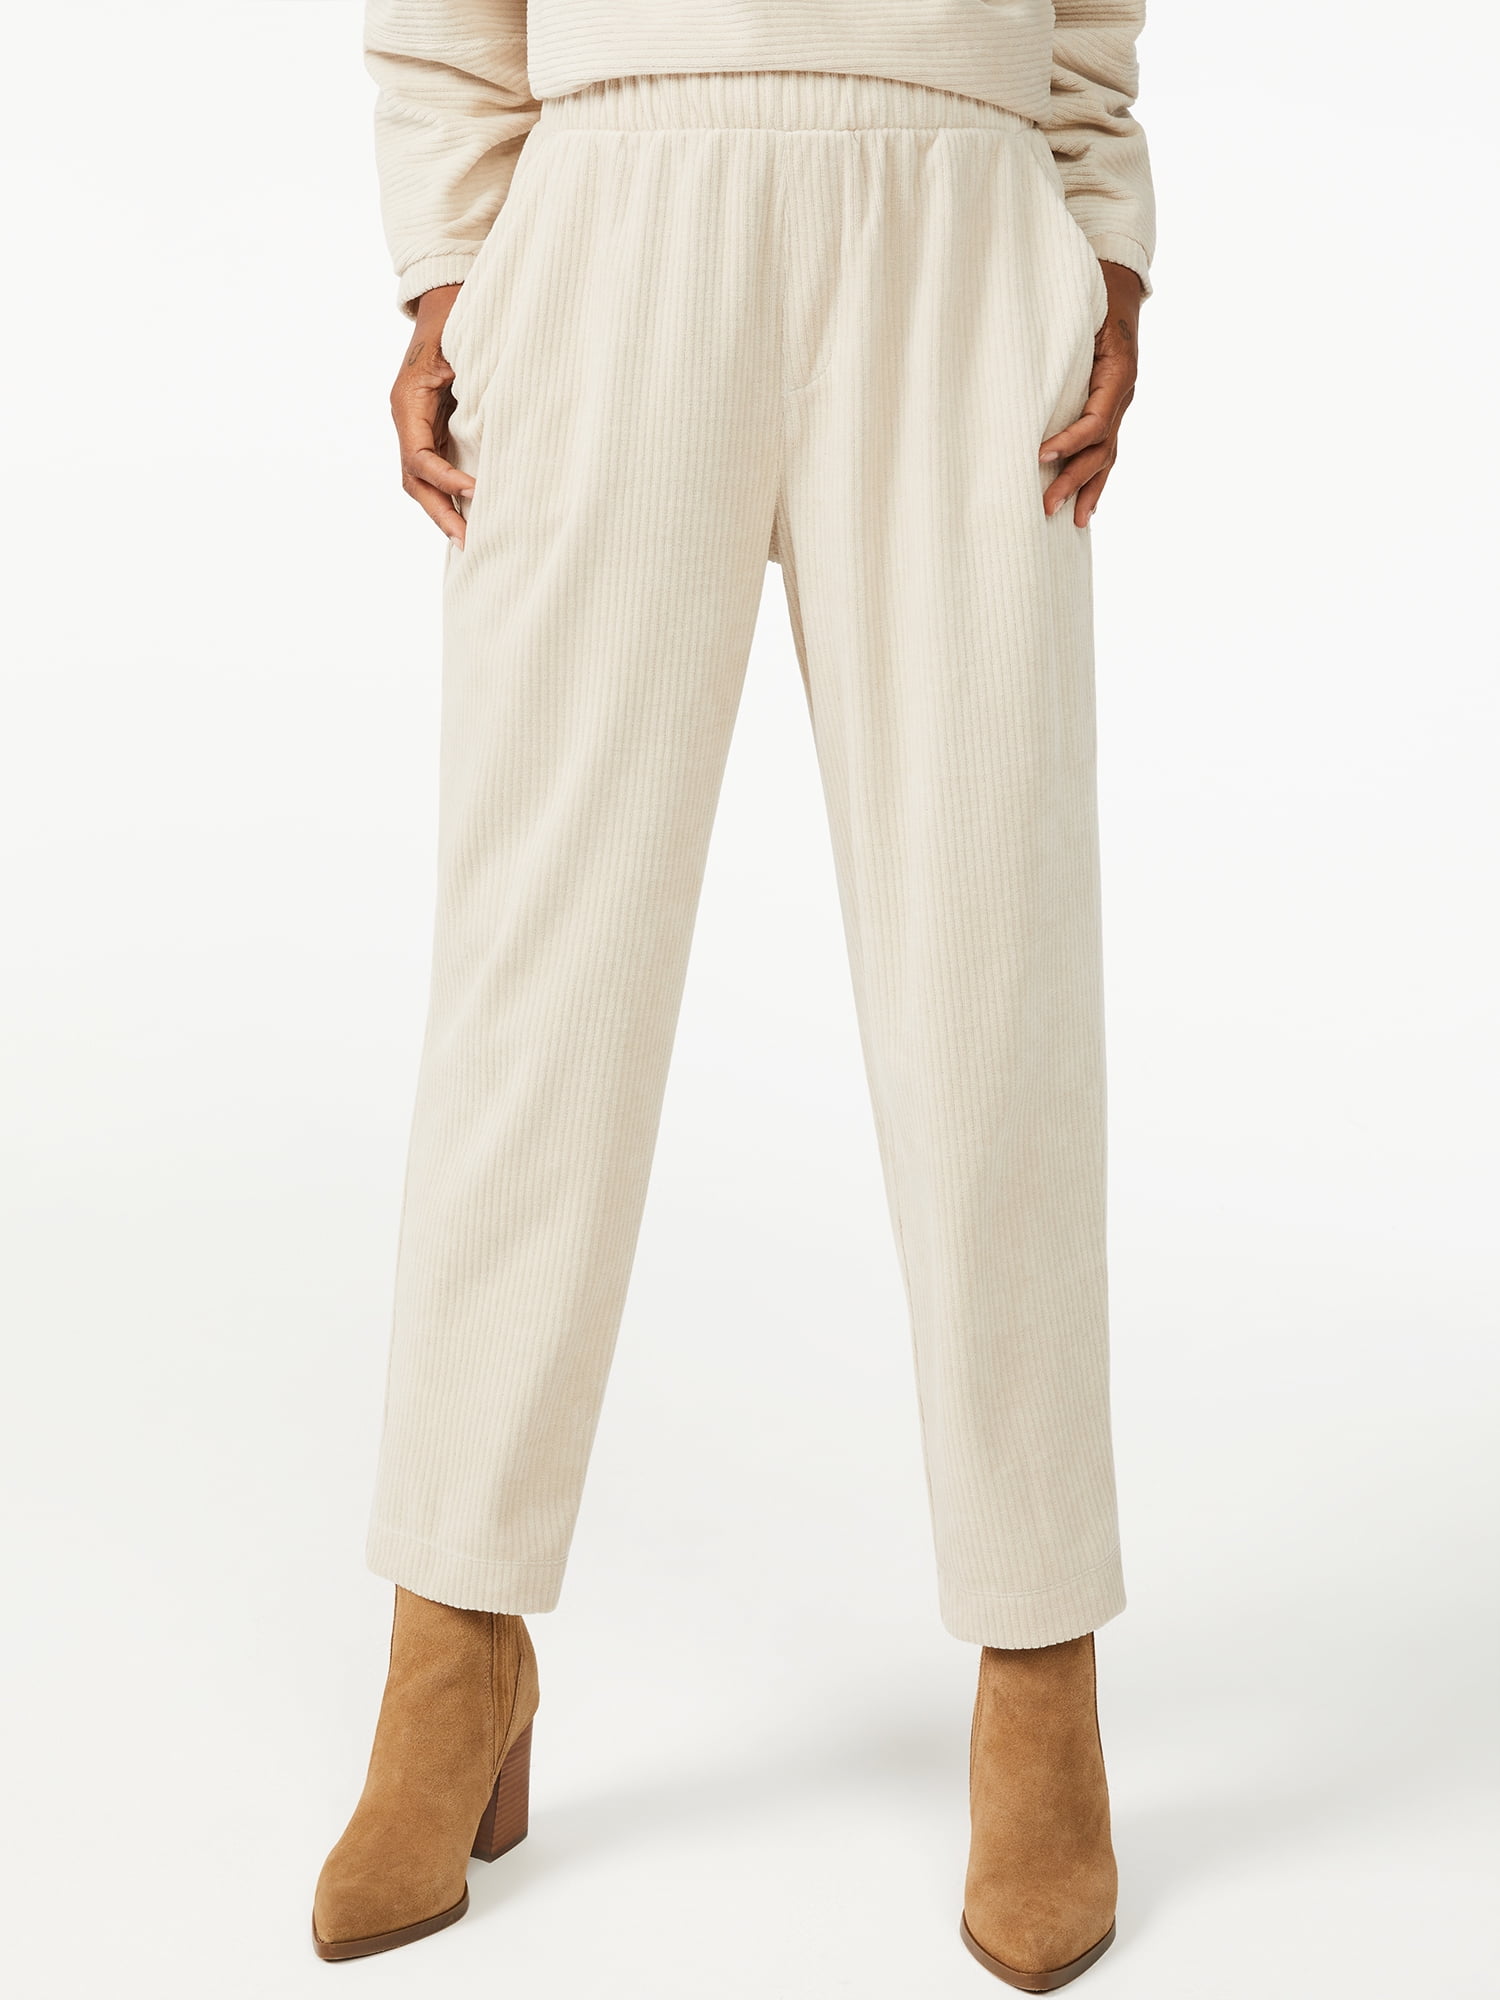 Women's Casco Corduroy Pants, Mid-Rise Straight-Leg | Pants at L.L.Bean